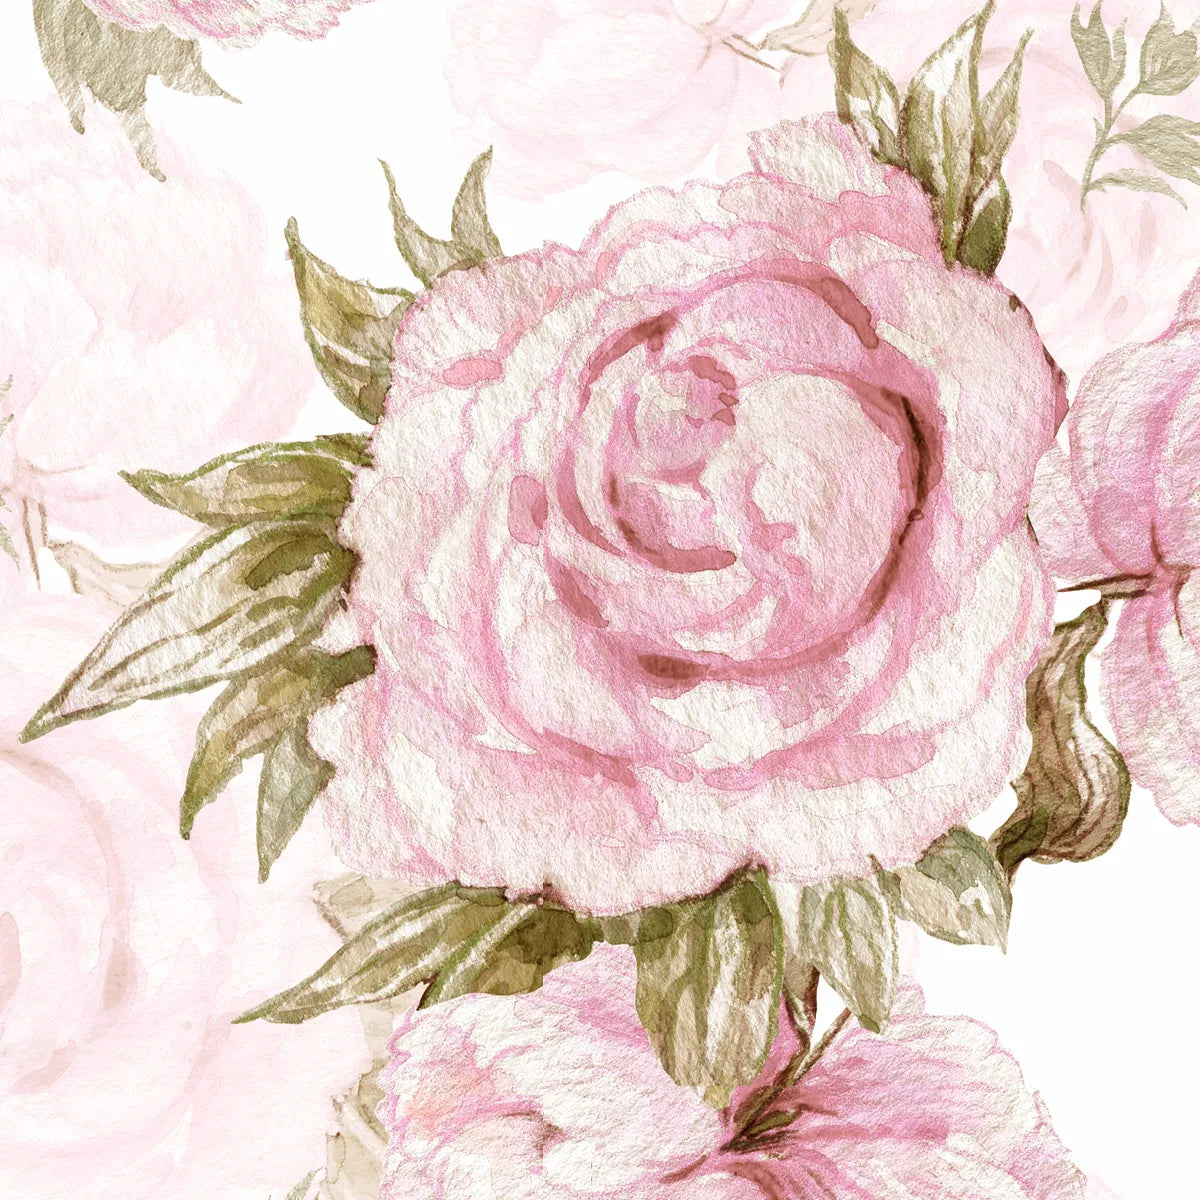 Premium Rose Design Pattern Wallpaper for Walls